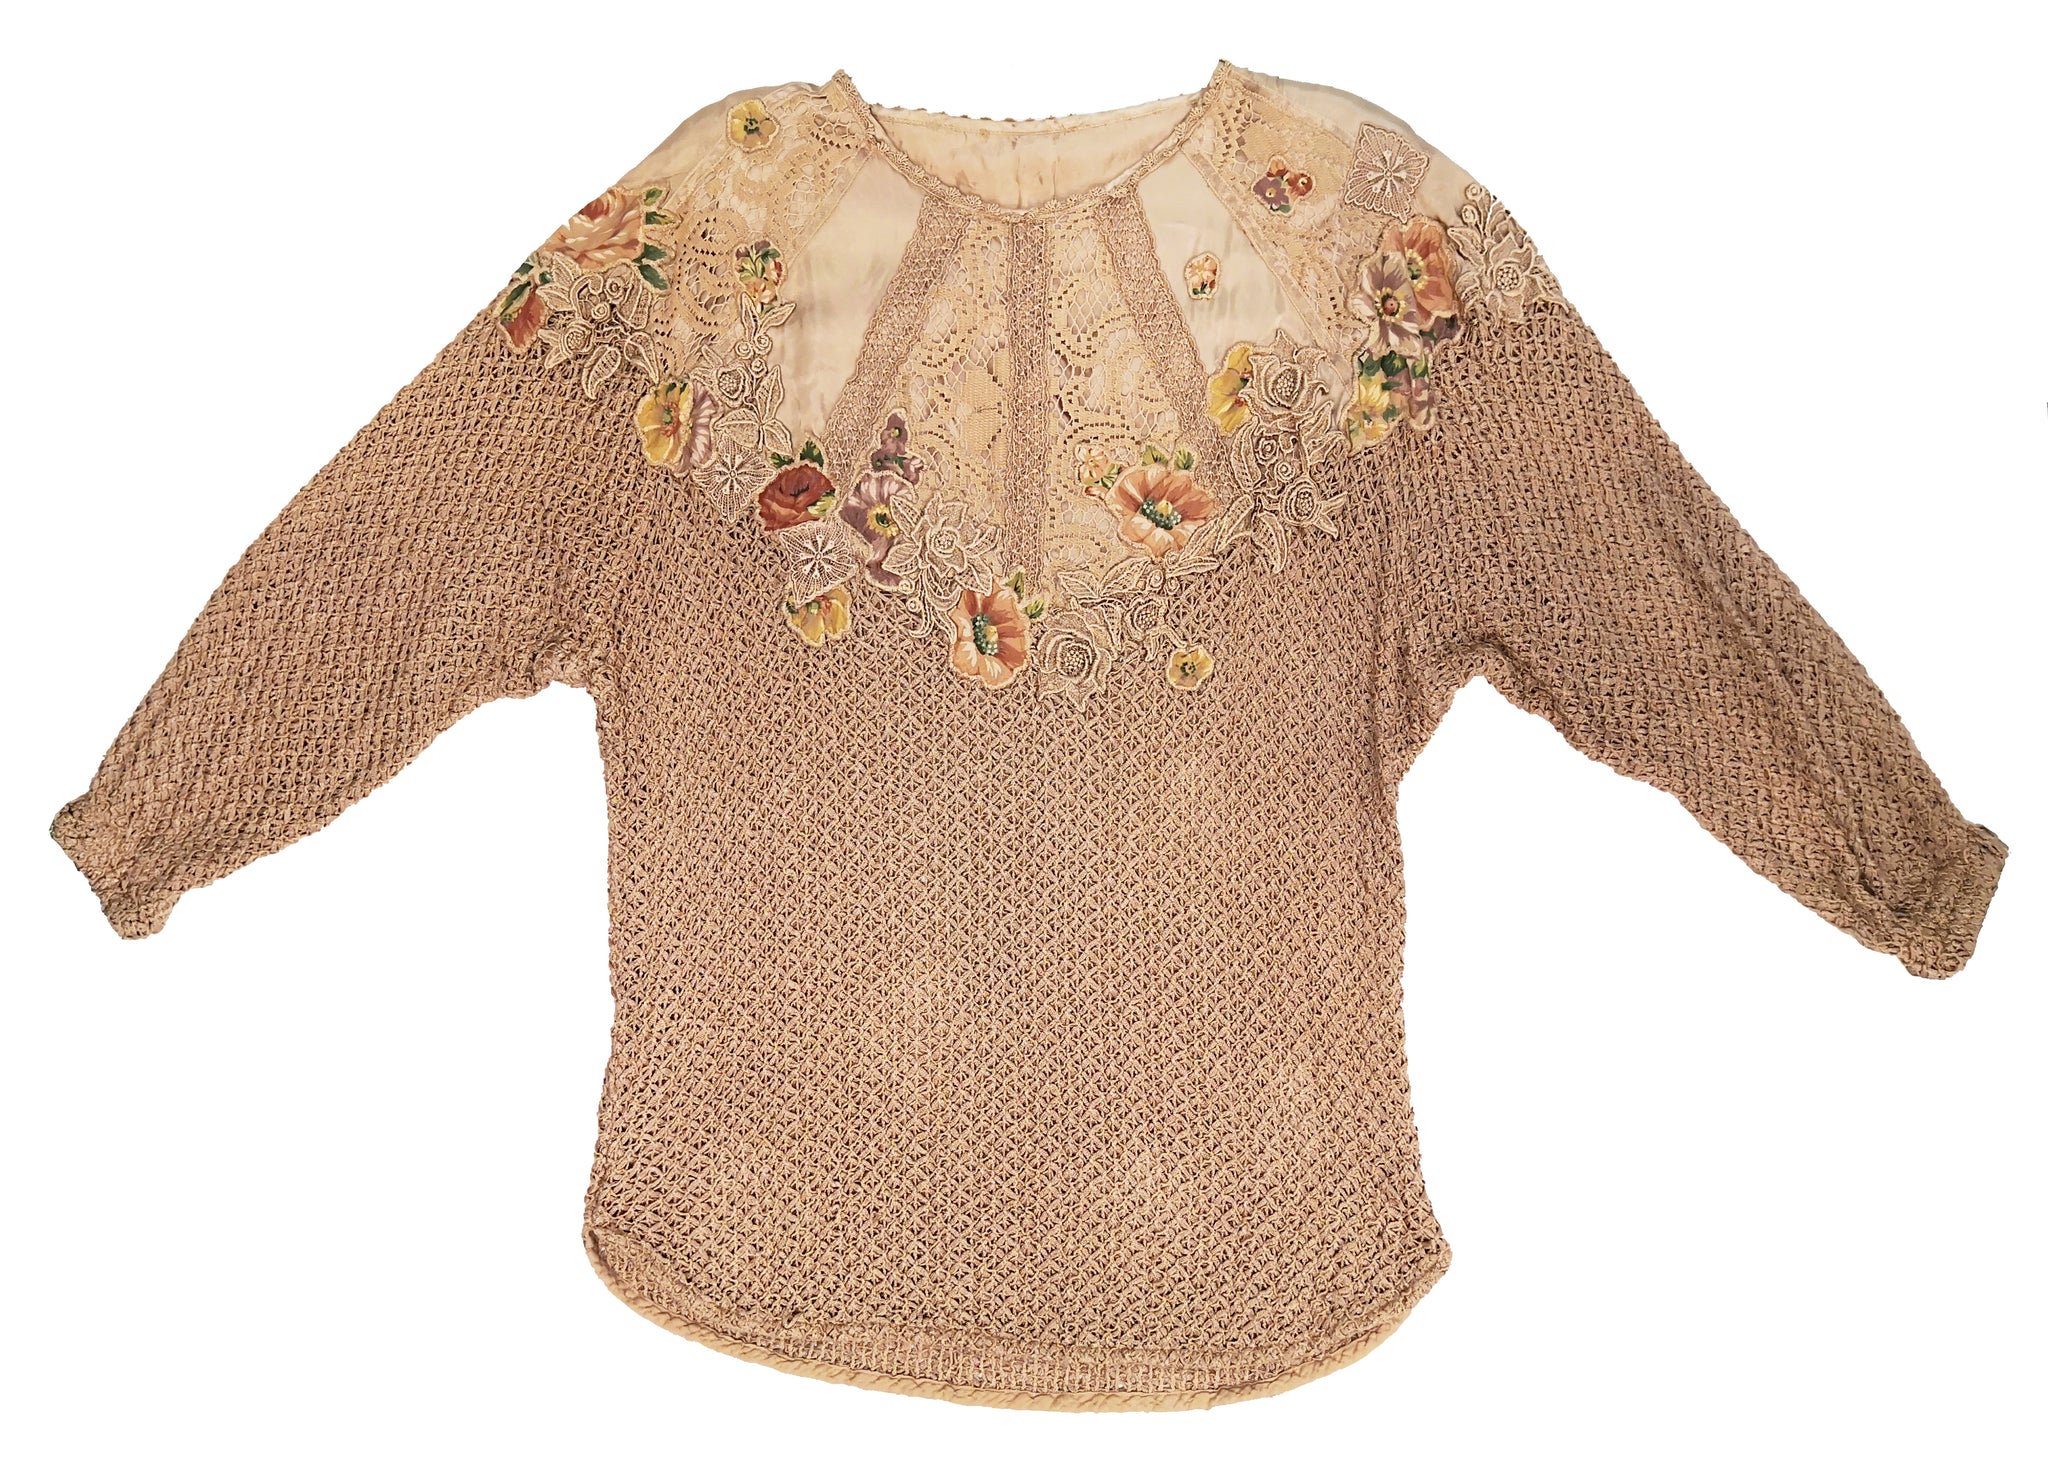 Norma Vintage _caramel sweater